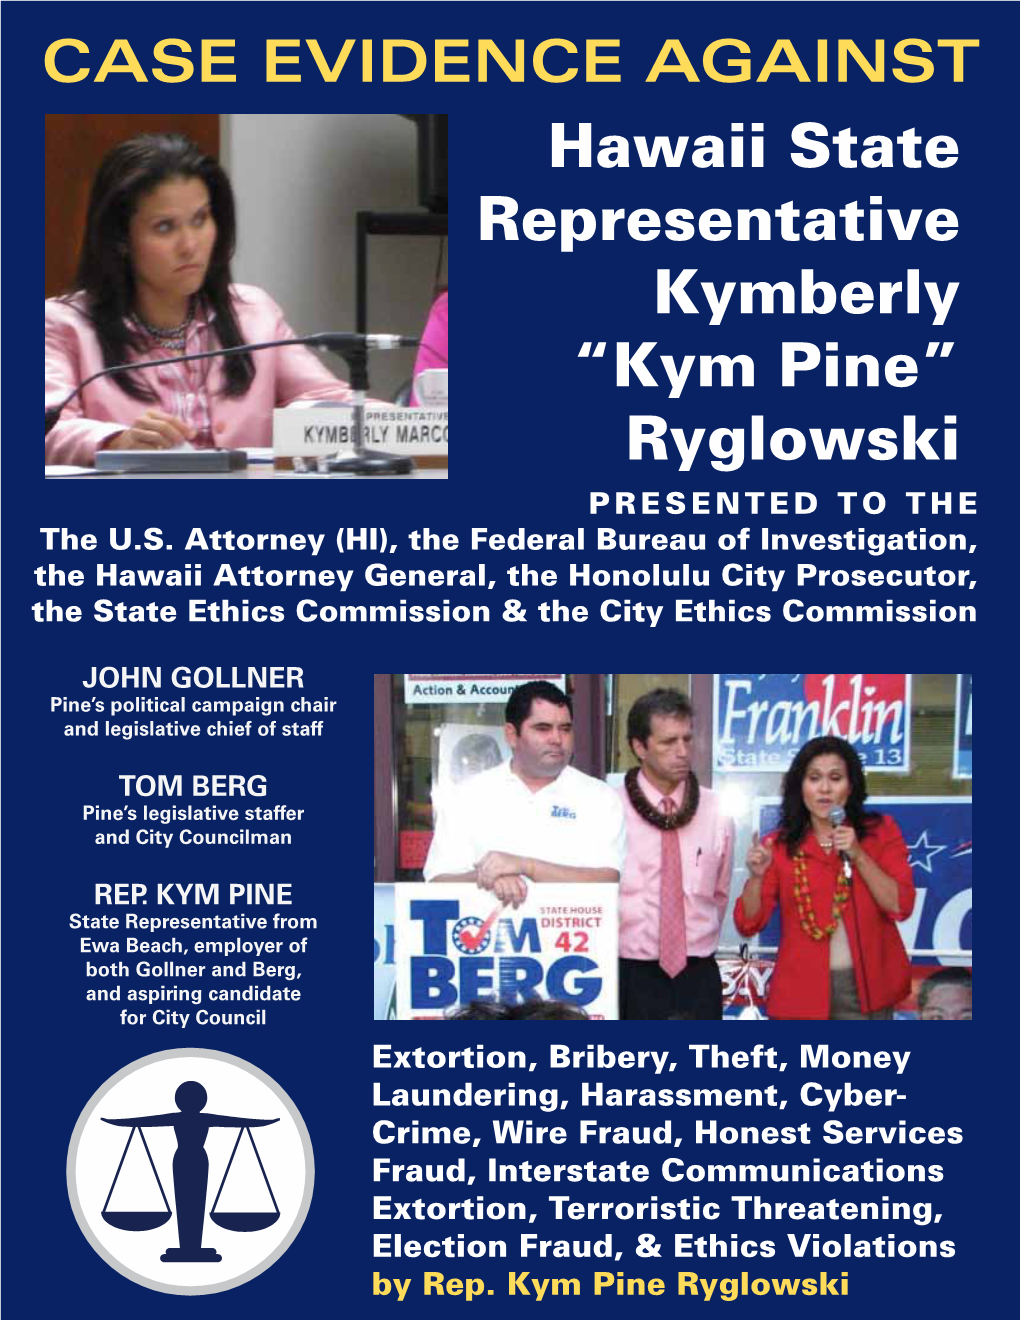 Hawaii State Representative Kymberly “Kym Pine” Ryglowski PRESENTED to the the U.S